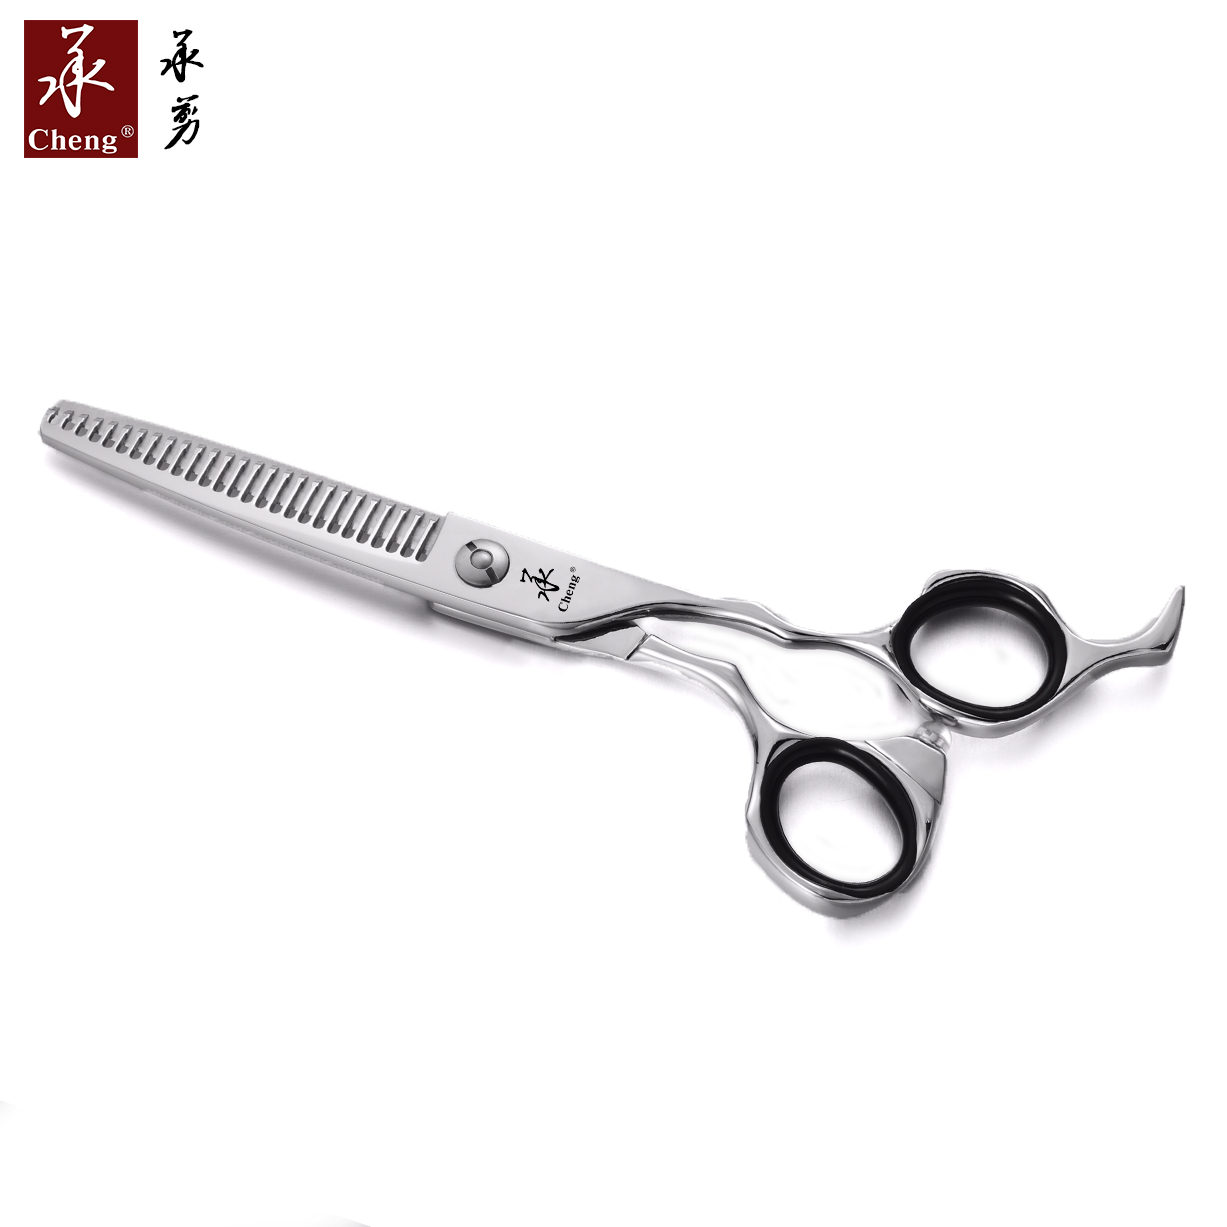 PC-60TZ high quality ATS314 salon scissors YONGHE